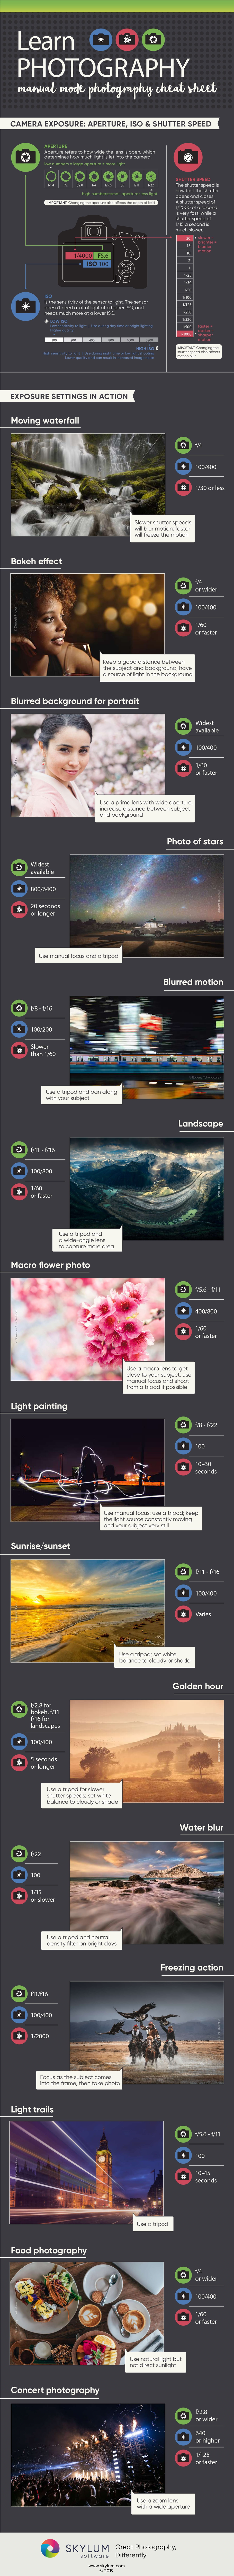 Photography Cheat Sheet: Manual Mode Camera Settings (Infographic) | Skylum Blog(2)